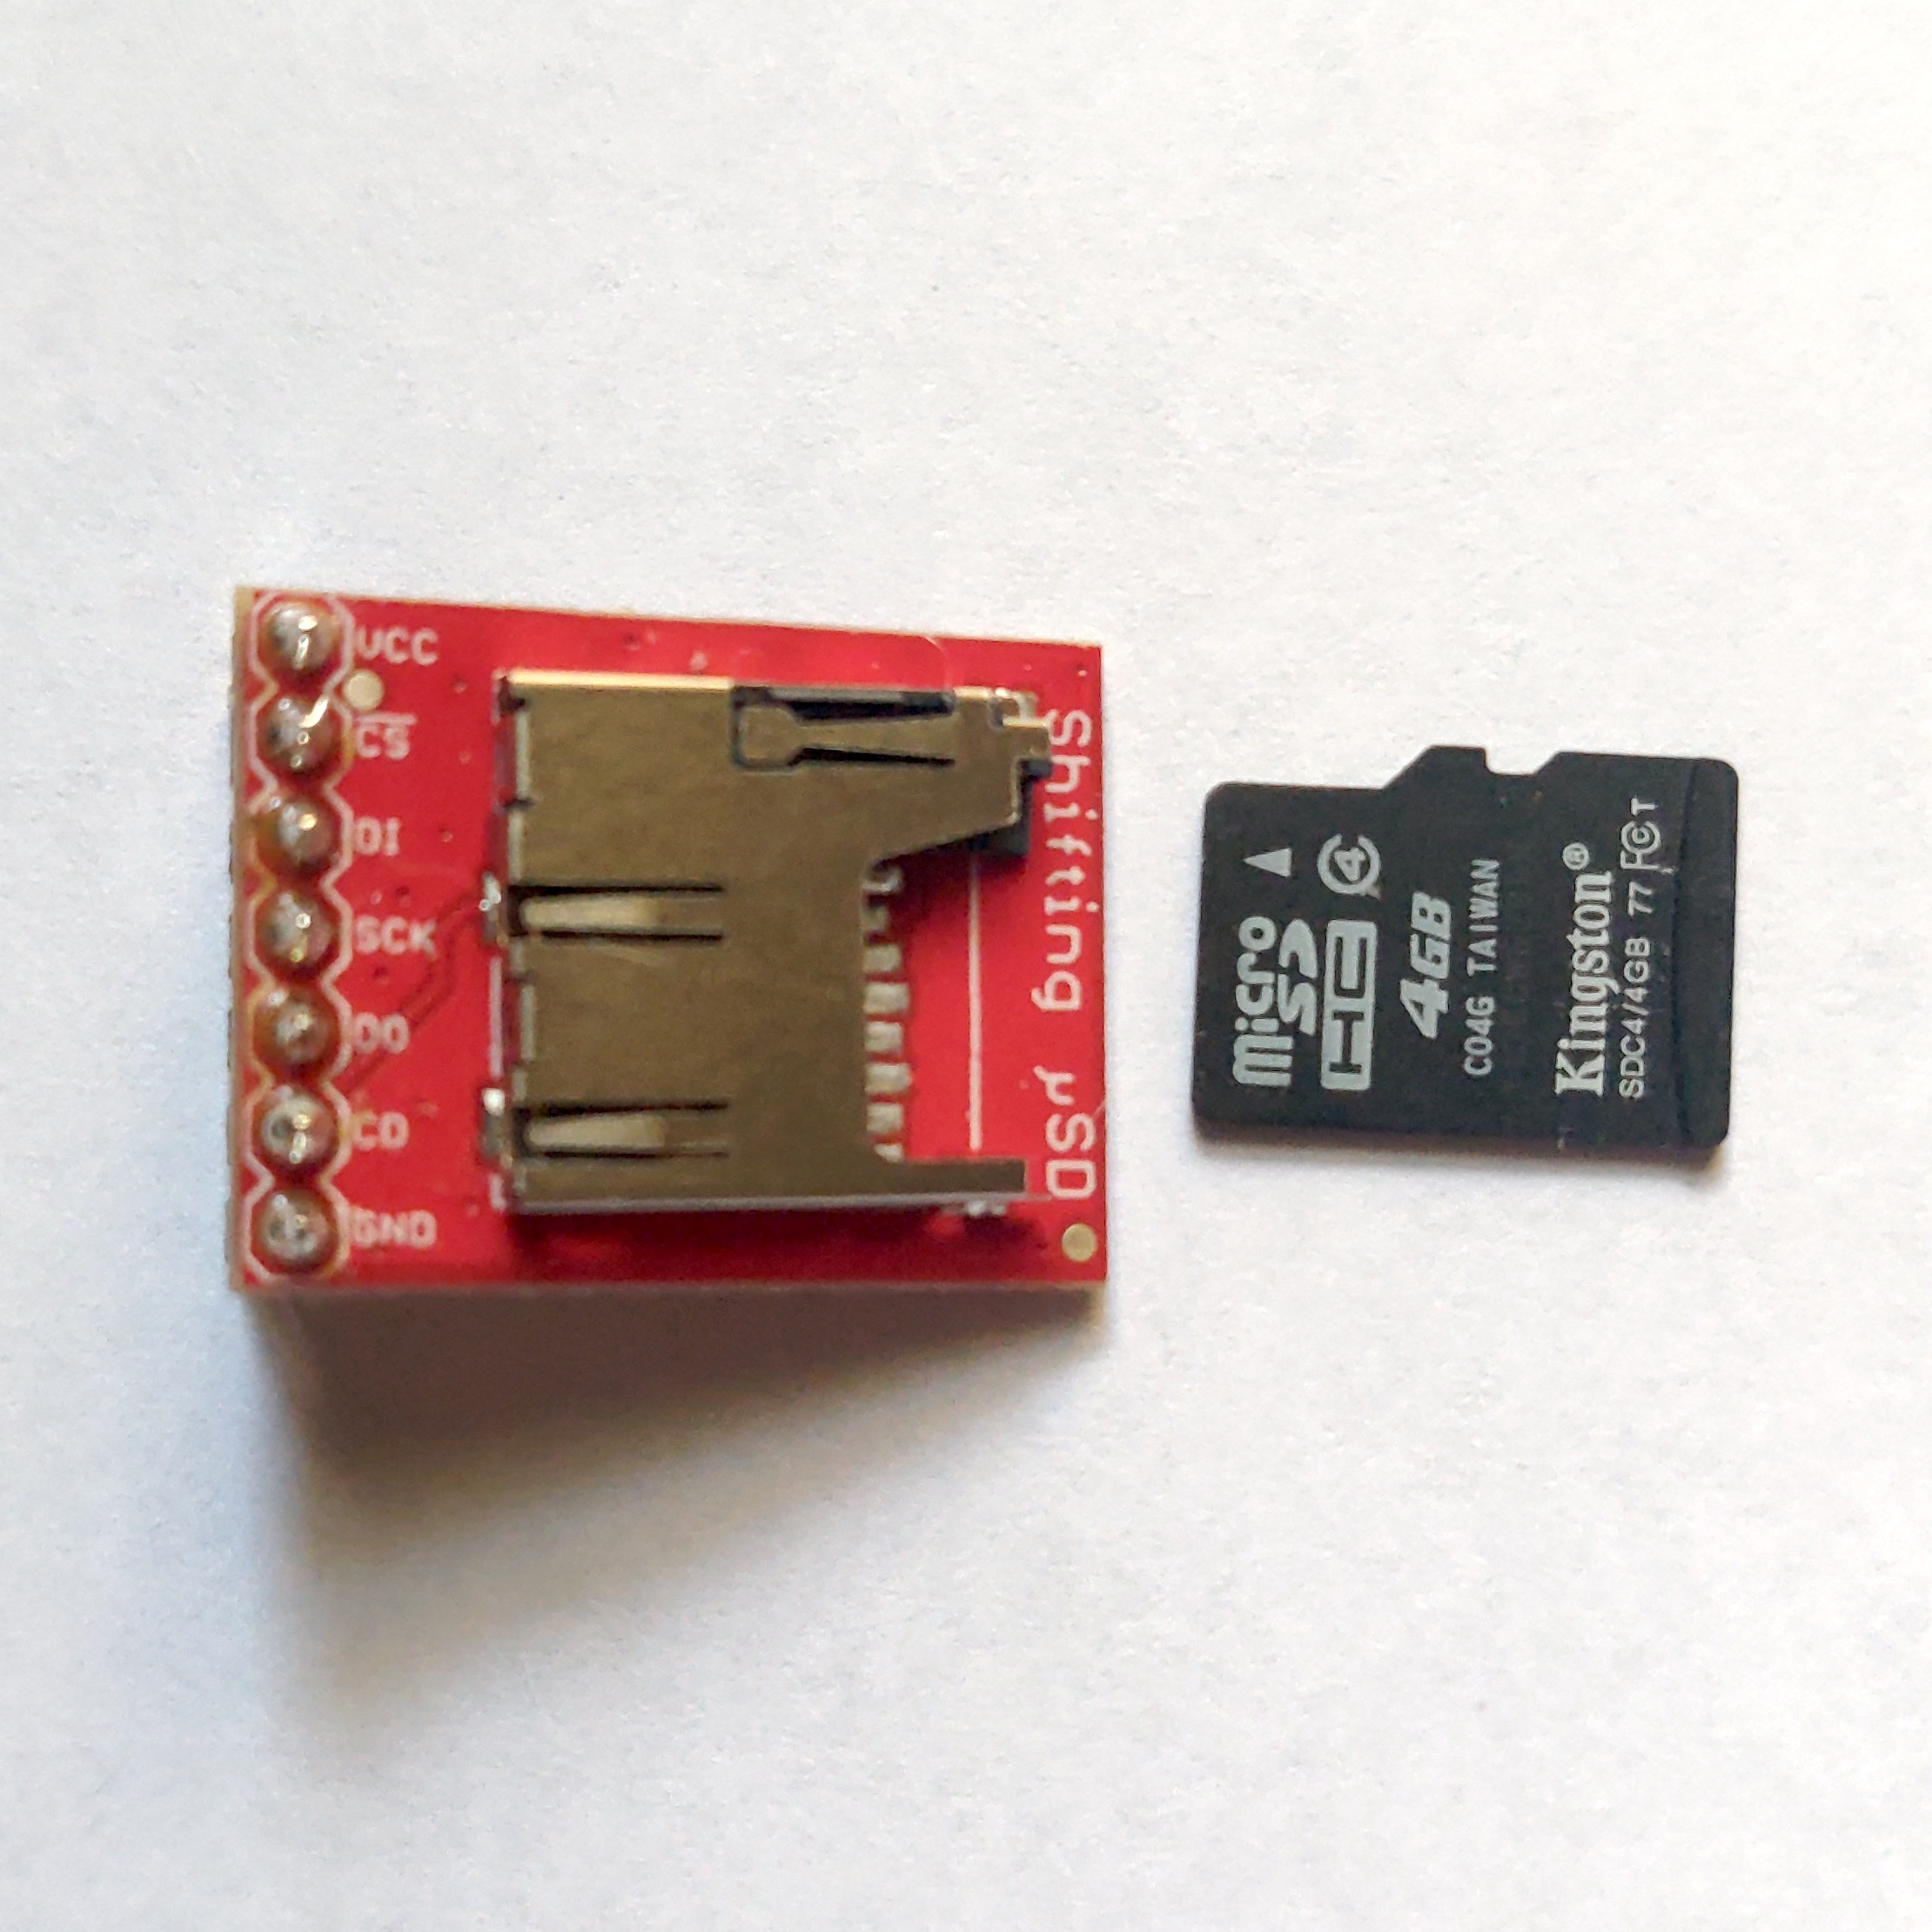 A photo of a microSD card breakout board